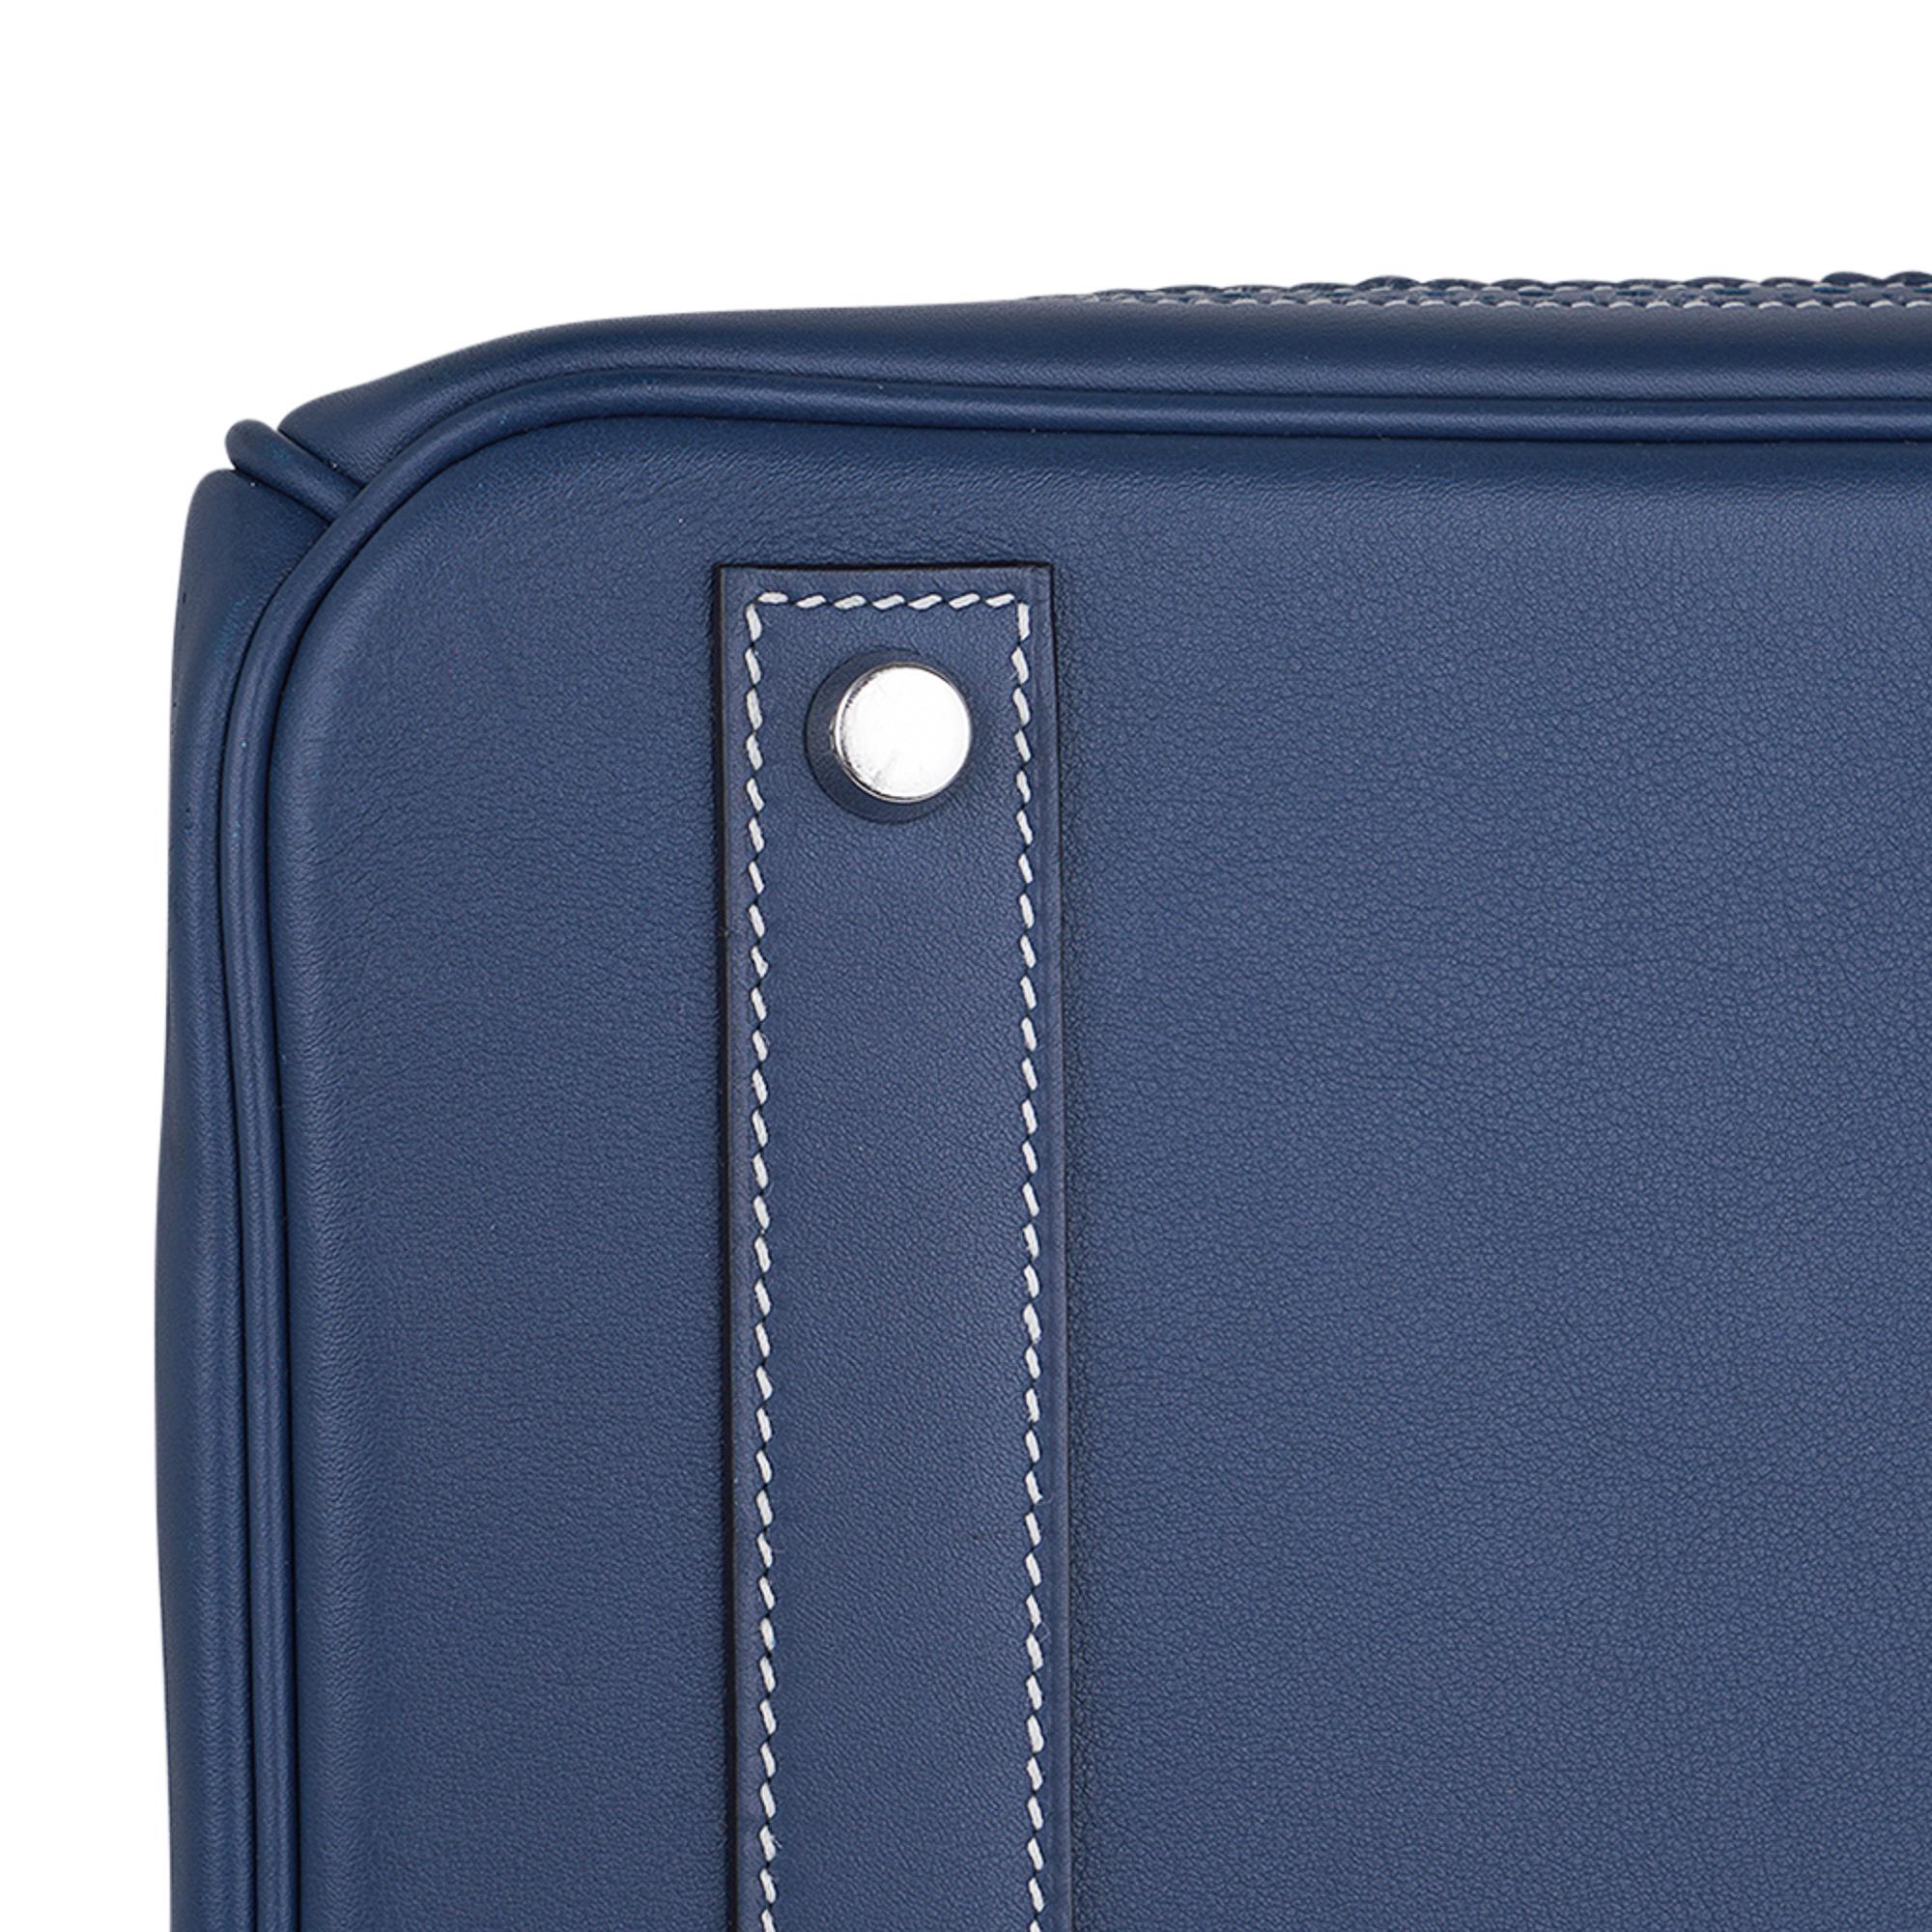 Hermes Birkin 40 Ghillies Blue de Prusse w/ Blue Toile Bag Limited Edition For Sale 10